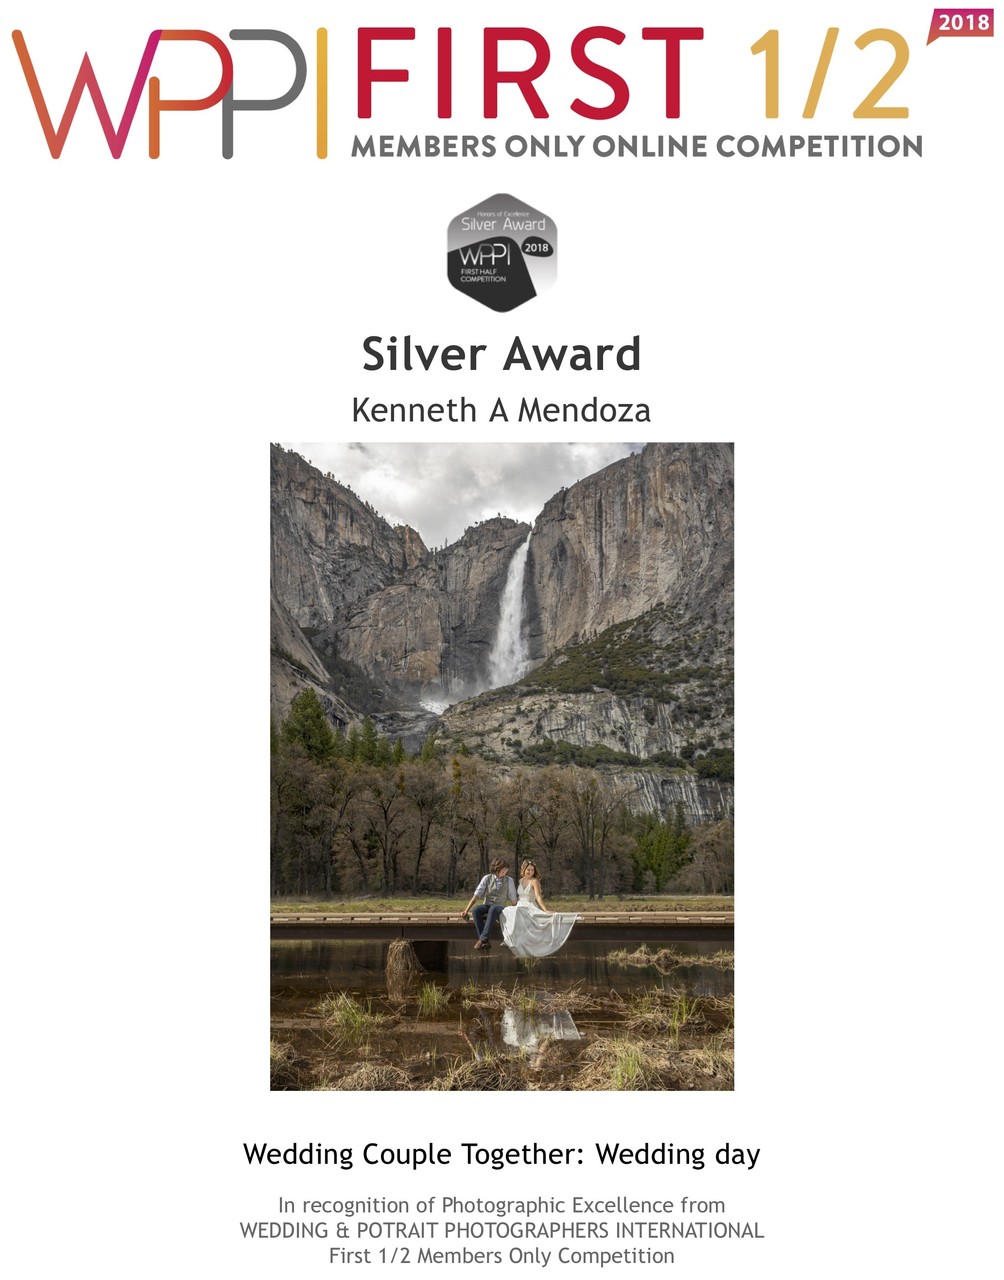 Silver-Award- Yosemite Wedding: Kenneth Mendoza's Shot